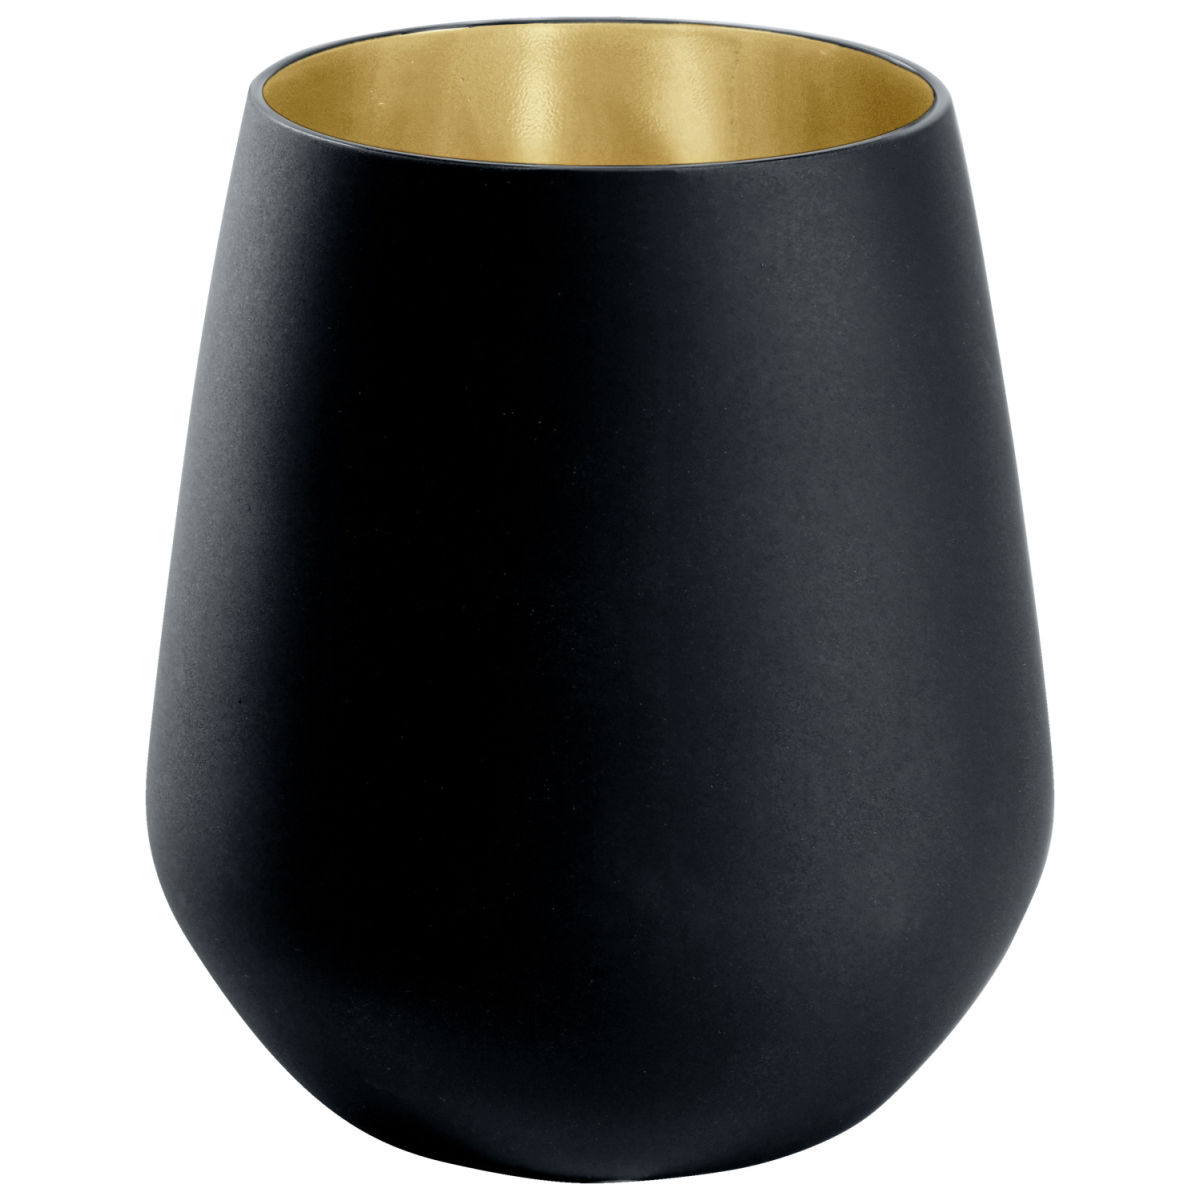 Vega Waterglas Aolani; 420ml, 6.5x10 cm (ØxH); zwart/goud; 6 stuk / verpakking